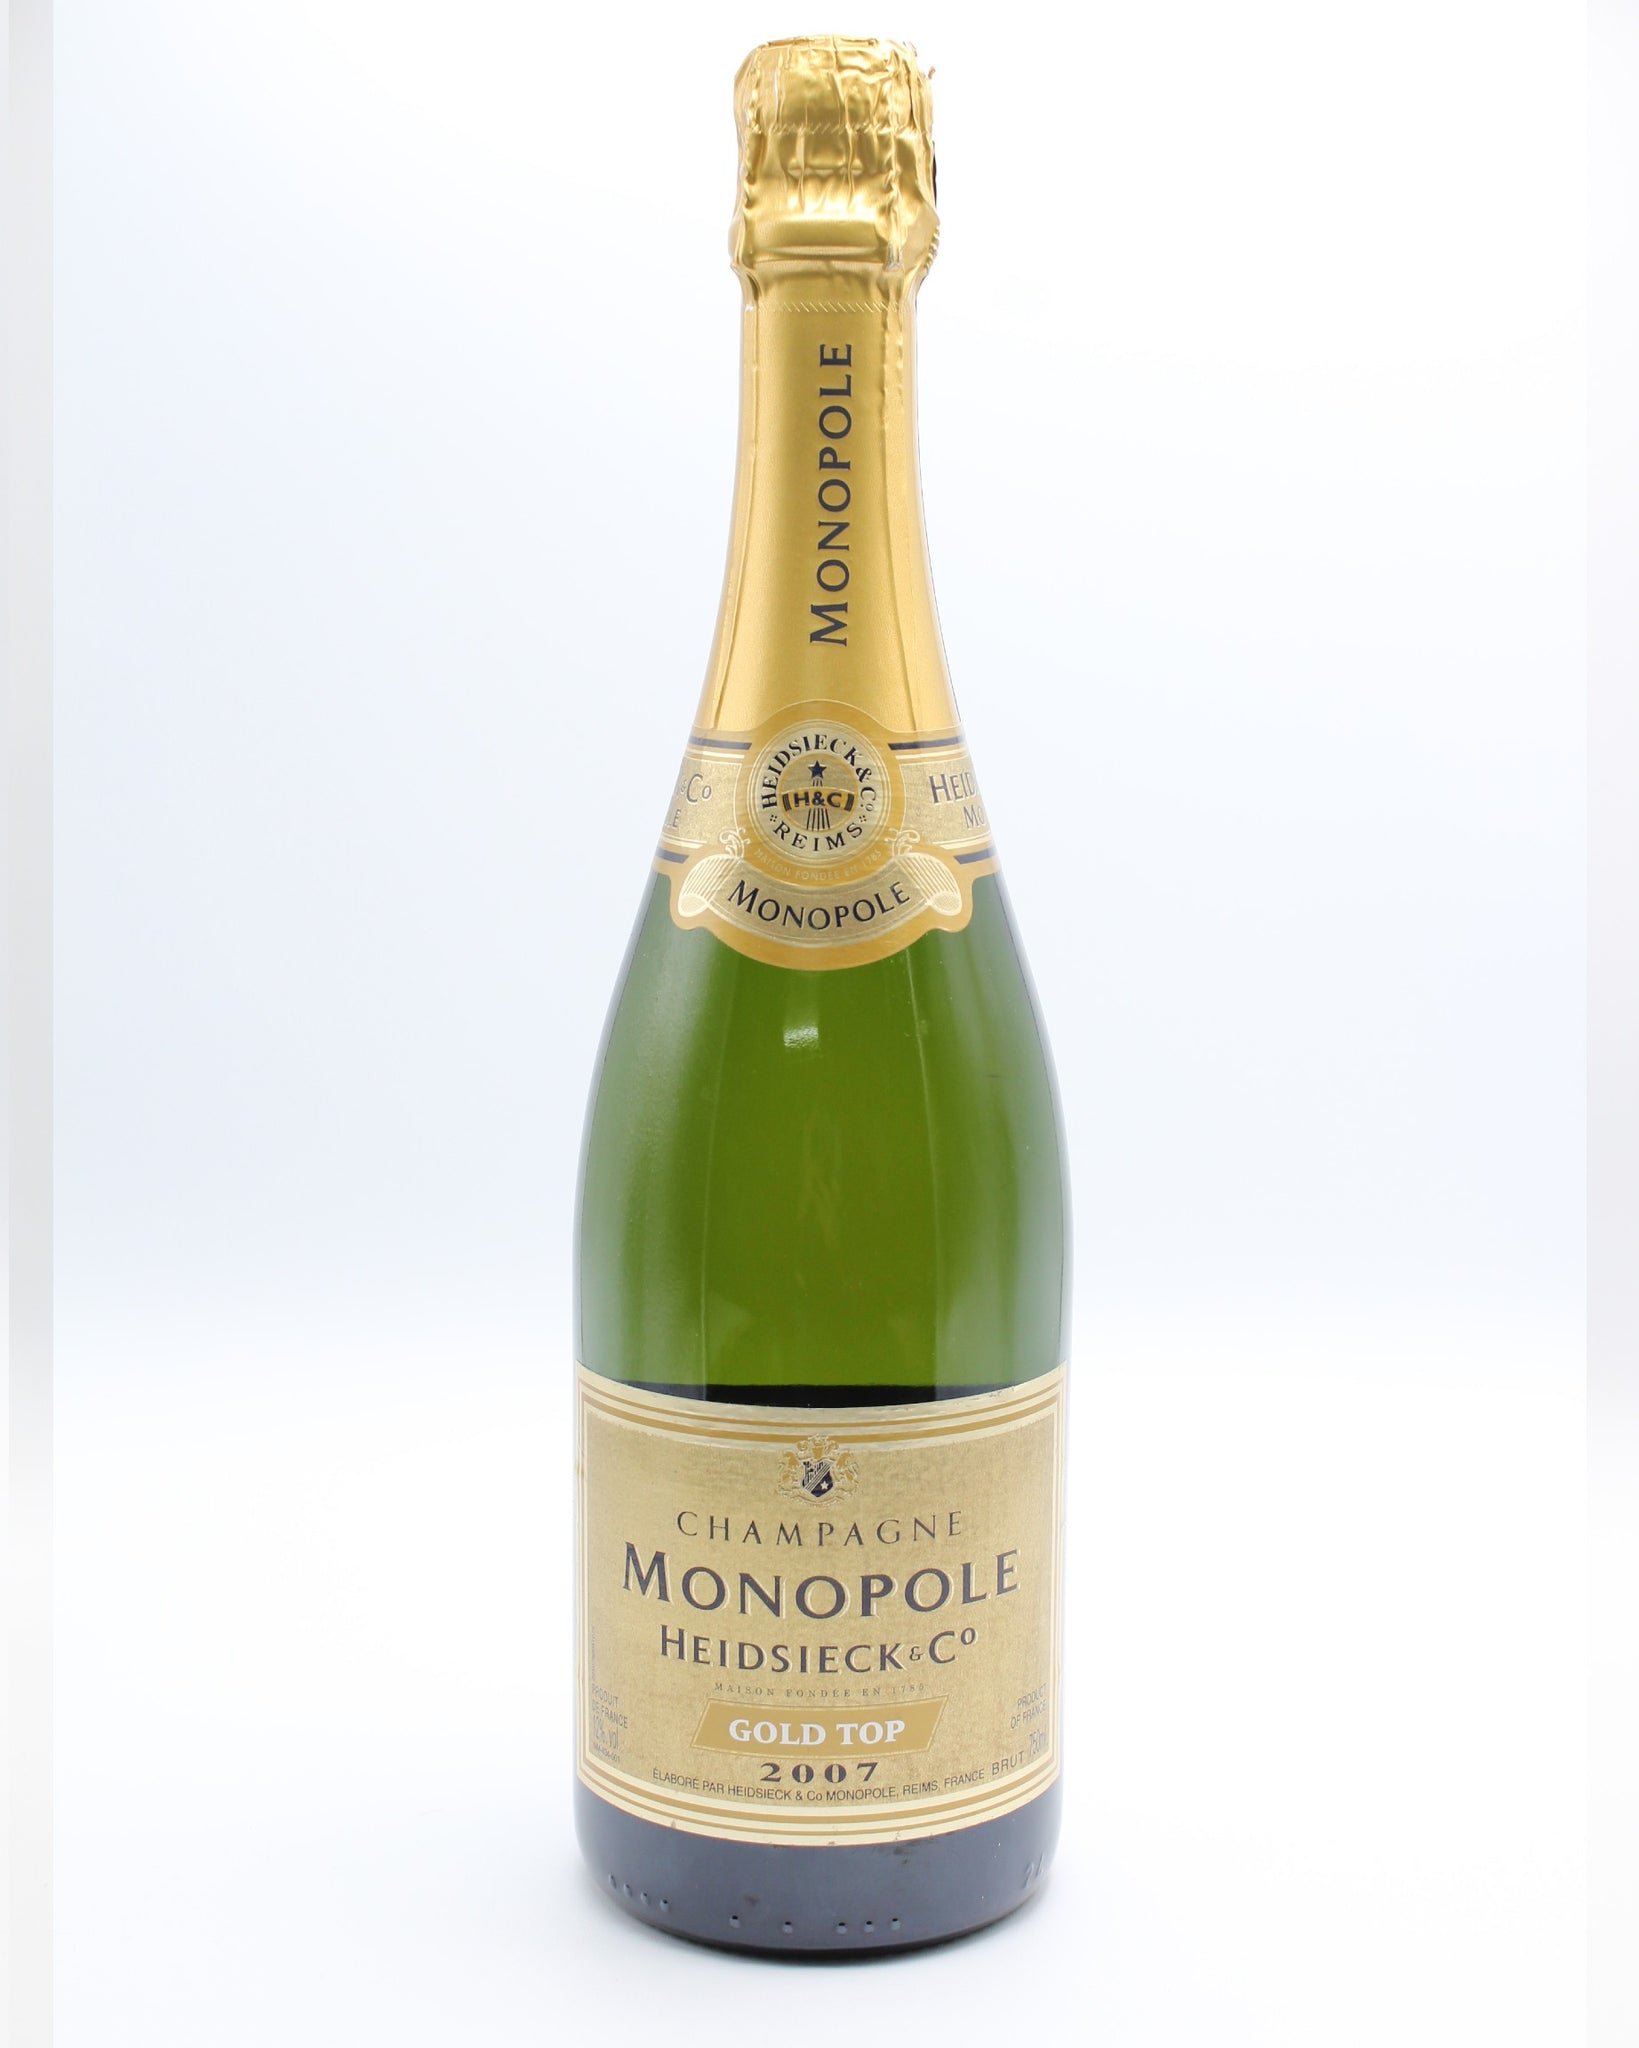 Heidsieck & Co Monopole Gold Top Brut, Champagne, 2007